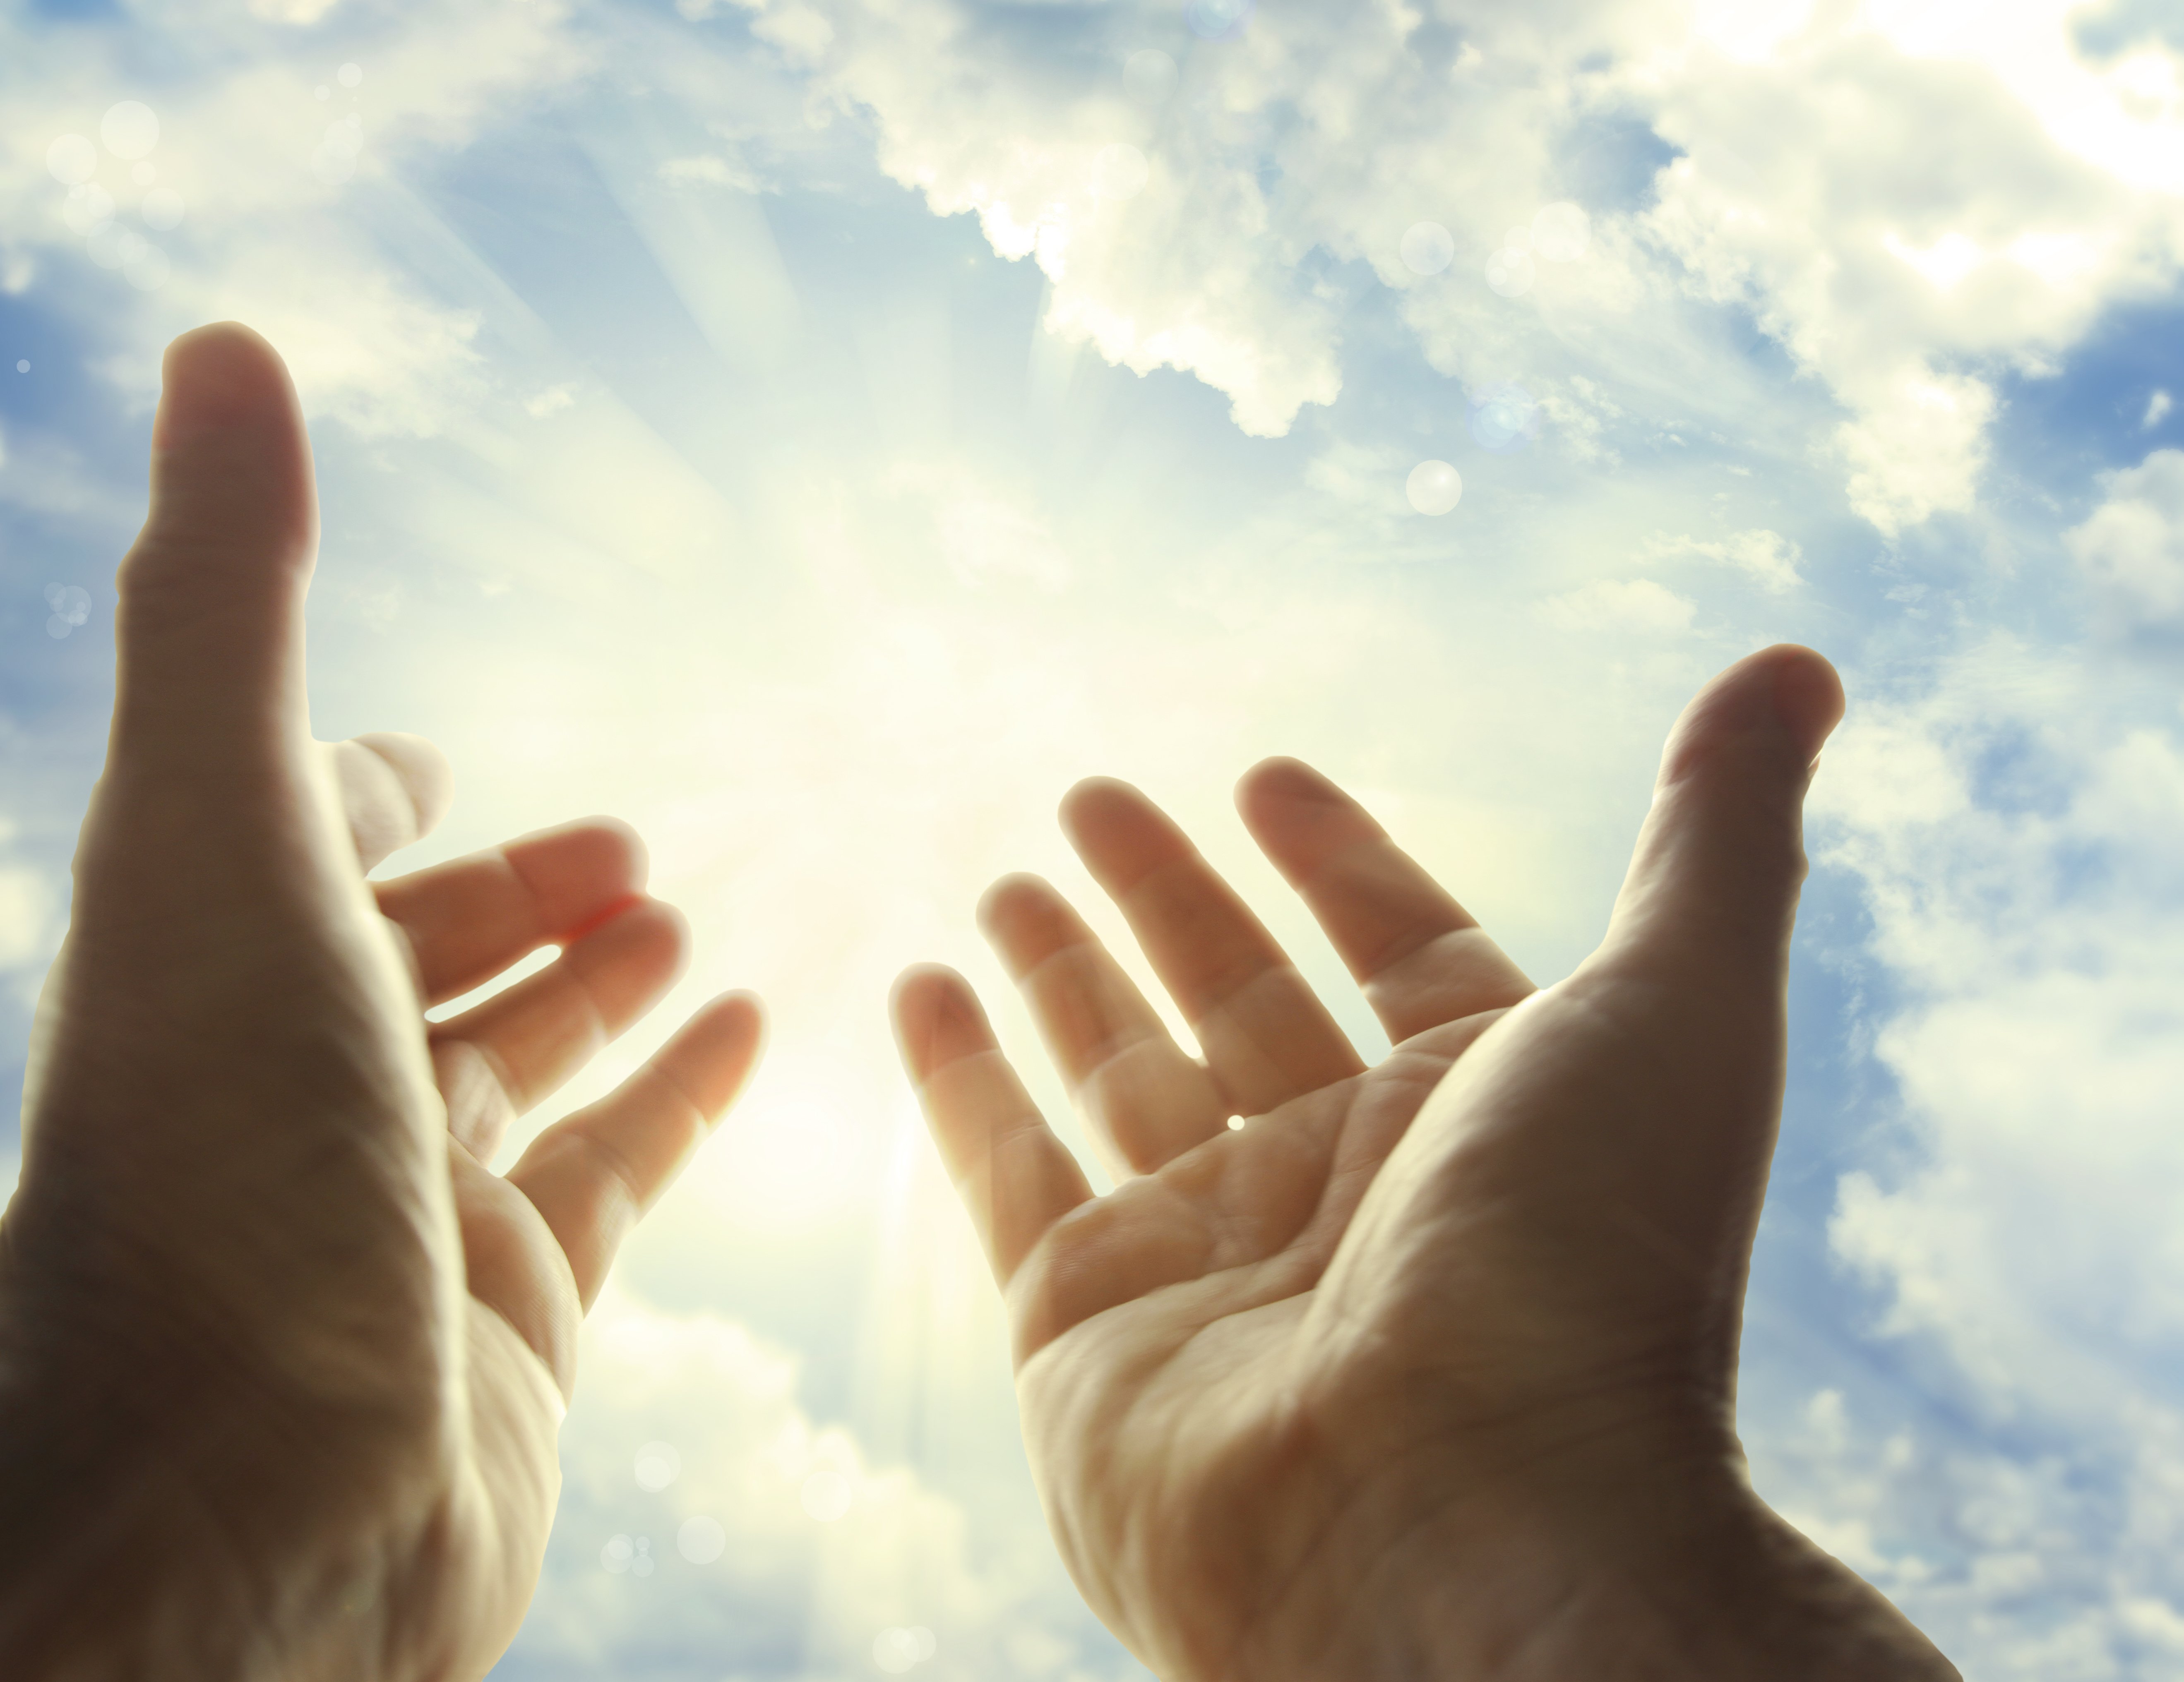 Небо на ладони голос. Руки протянутые к небу. Рука тянется к небу. Рука Бога. Молитва руки к небу.